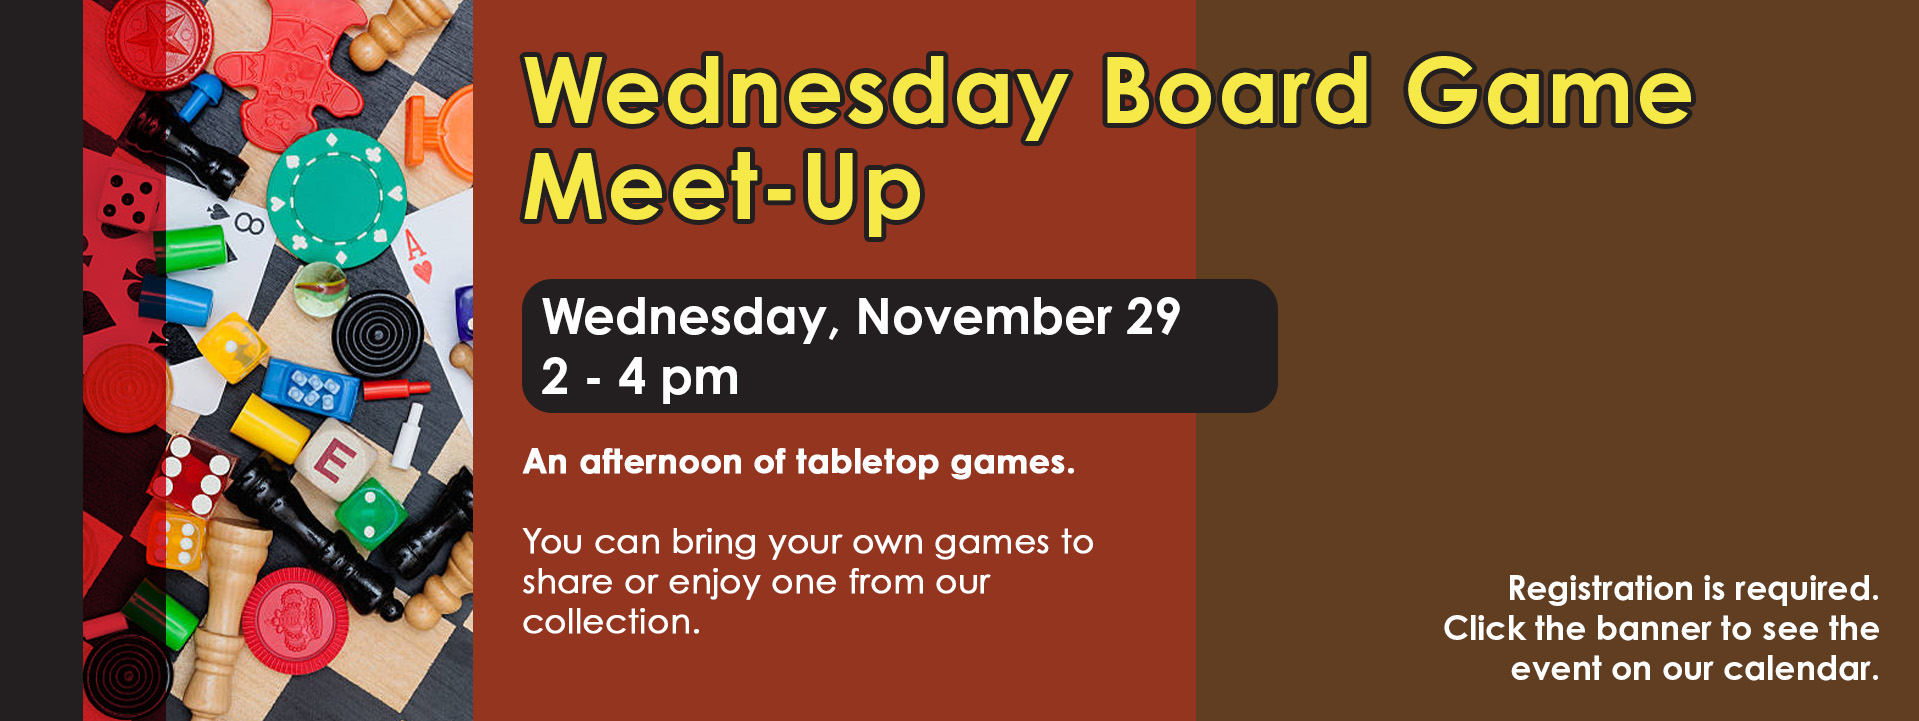 Wednesday board game Nov 29 